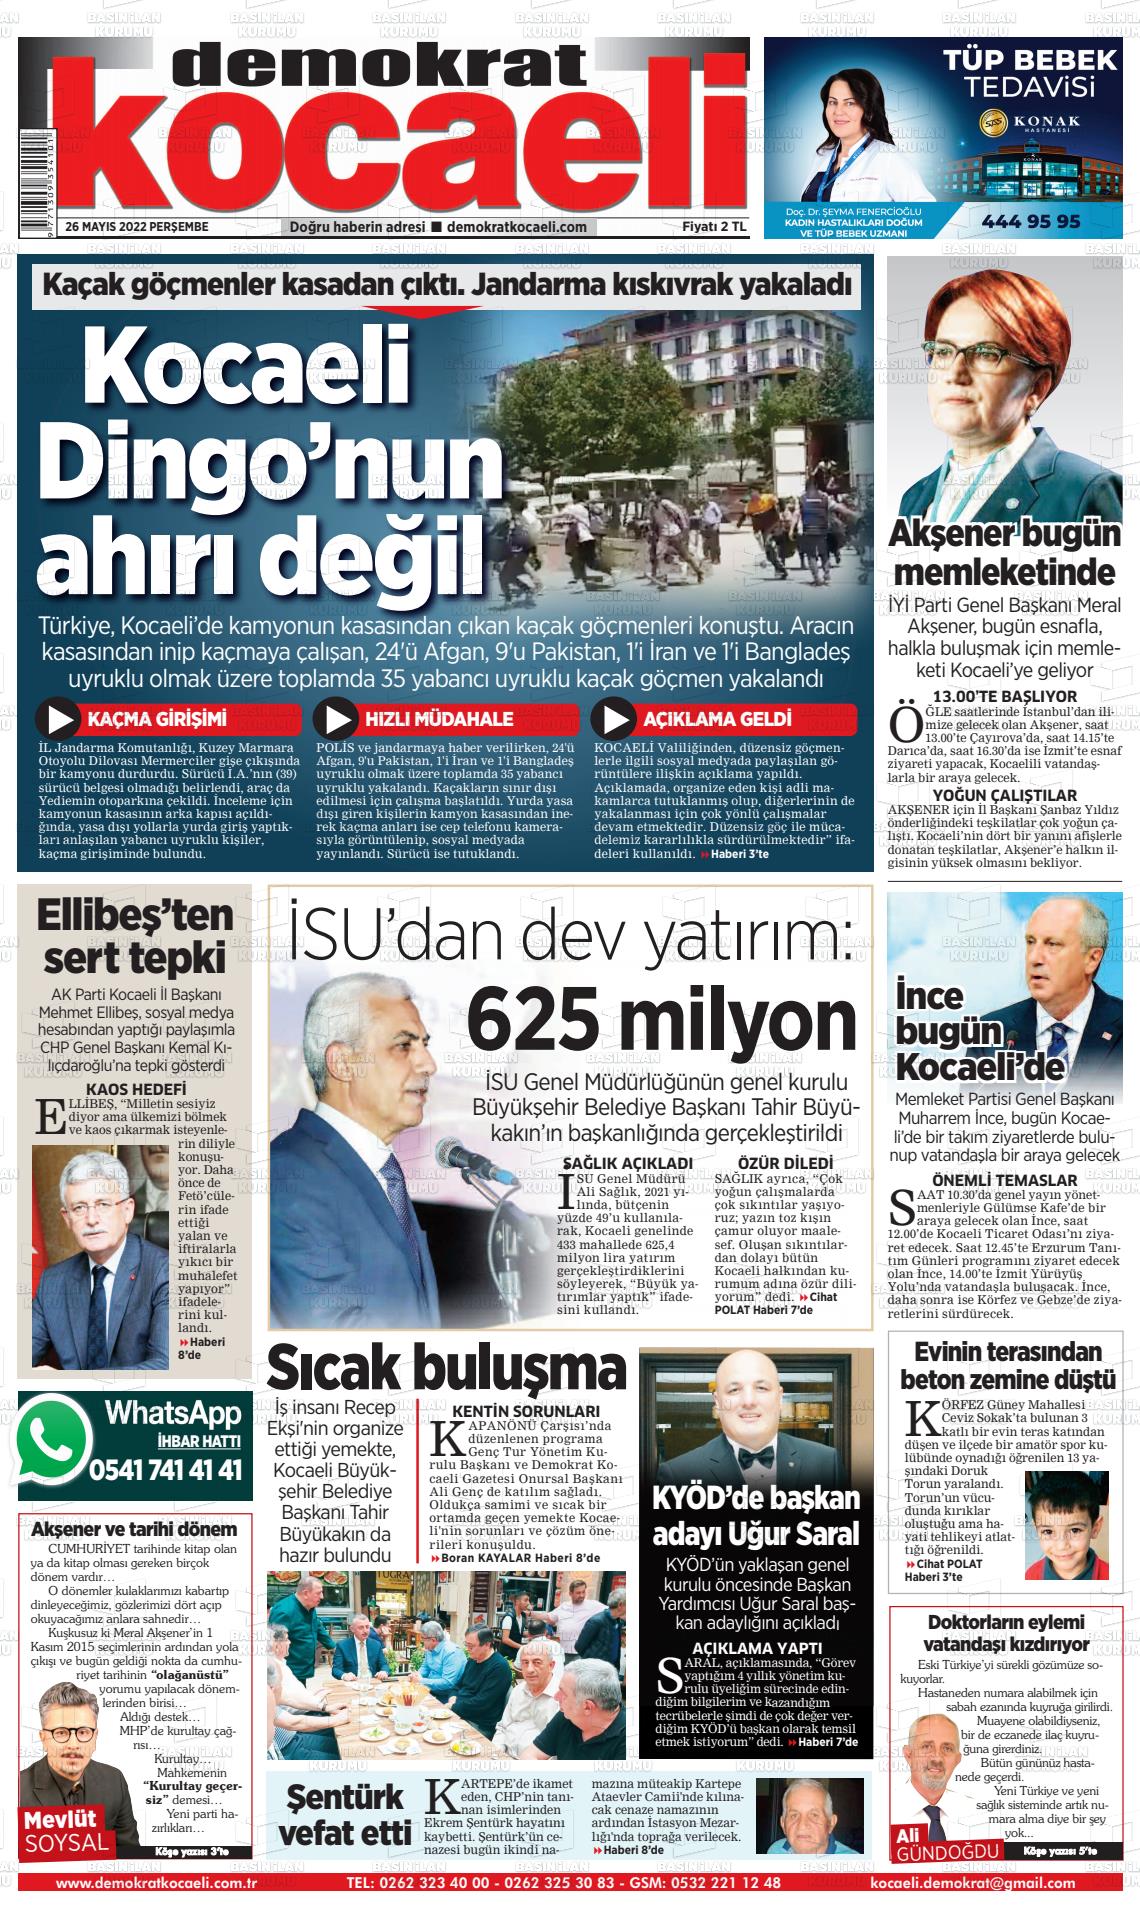 26 Mayıs 2022 Demokrat Kocaeli Gazete Manşeti